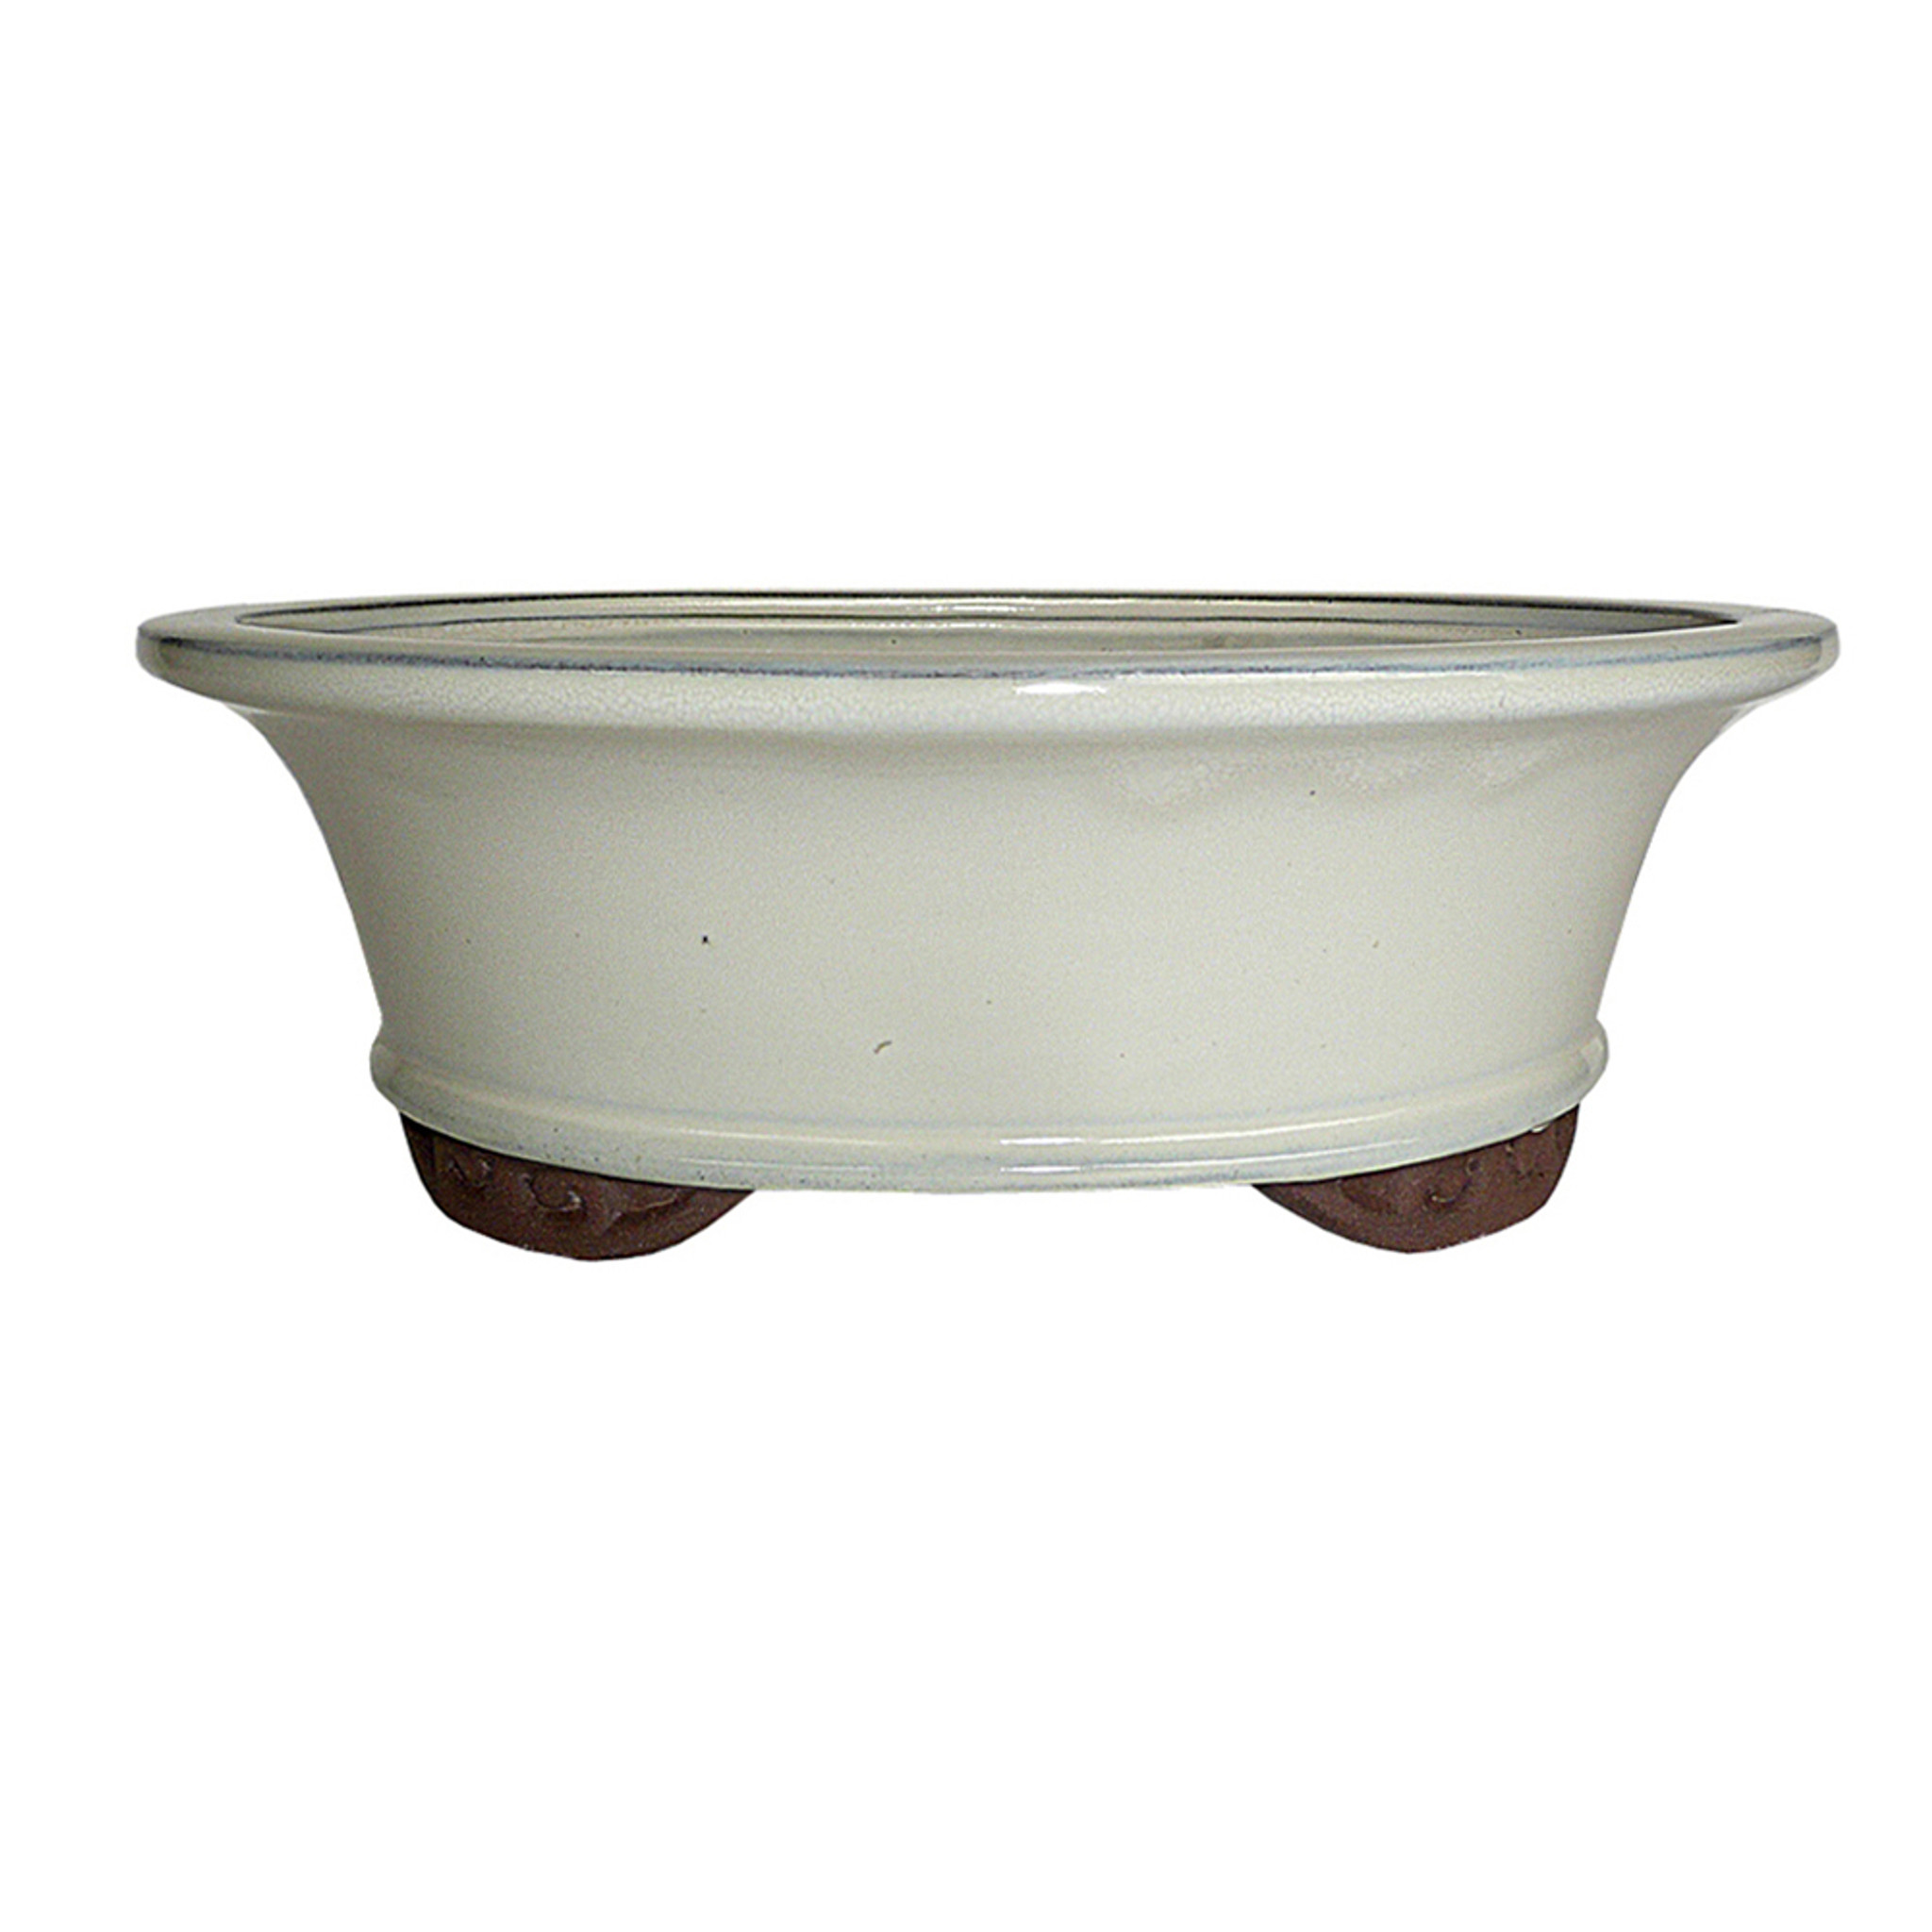 Brussel's Bonsai Large New Cream Oval Pot, New Cream Glazed Finish